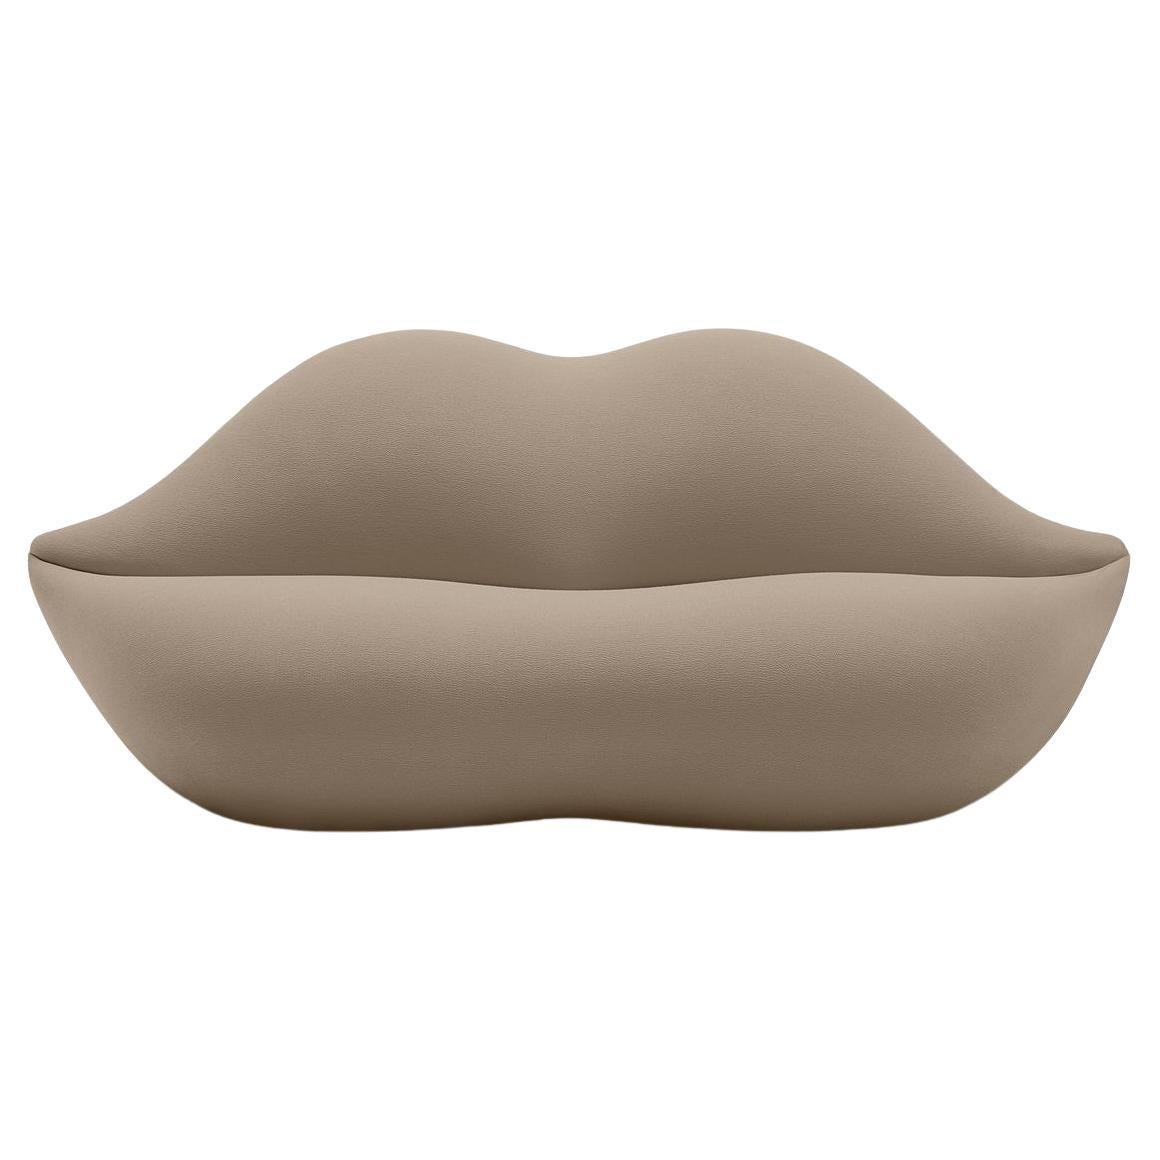 Gufram, Bocca Lip-Shaped Sofa, Biscuit, by Studio 65